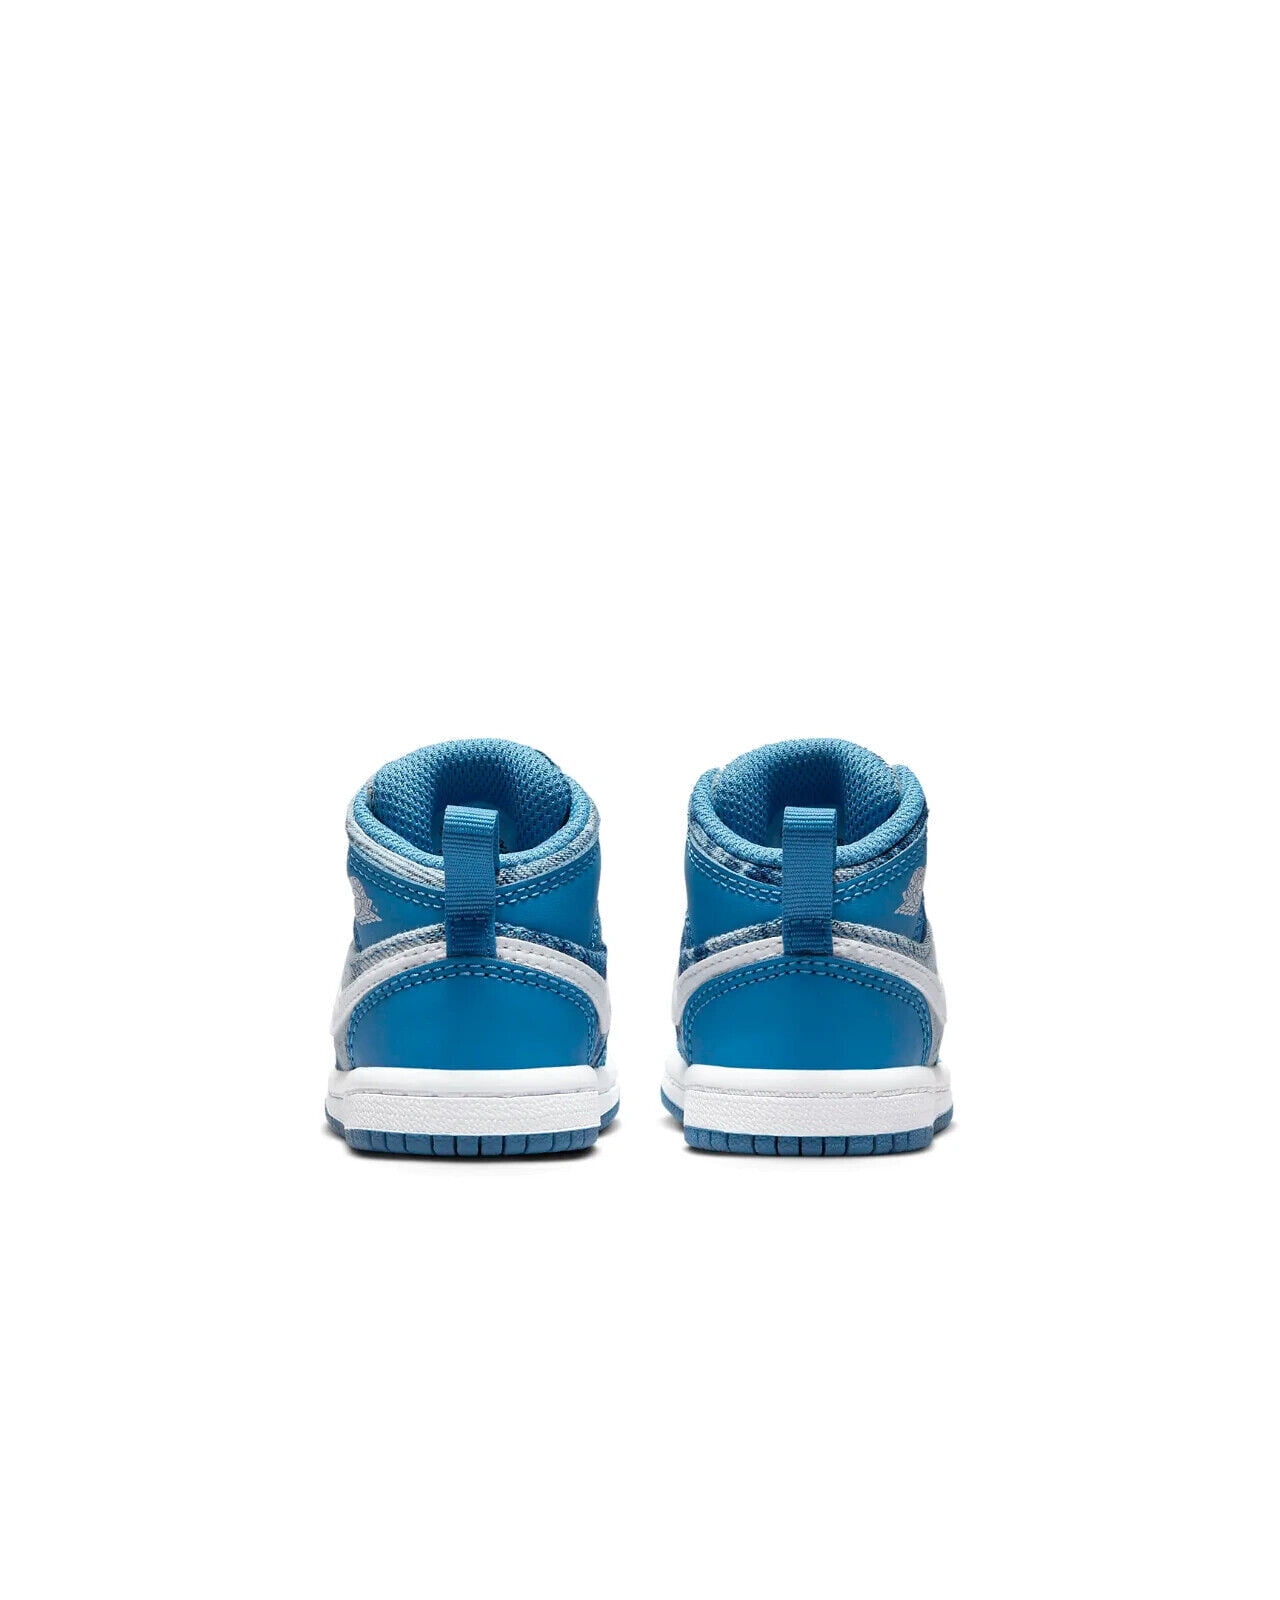  Big Kid's Jordan 1 Mid Washed Denim Dutch Blue/White (DM8951  400) - 3.5 : Clothing, Shoes & Jewelry